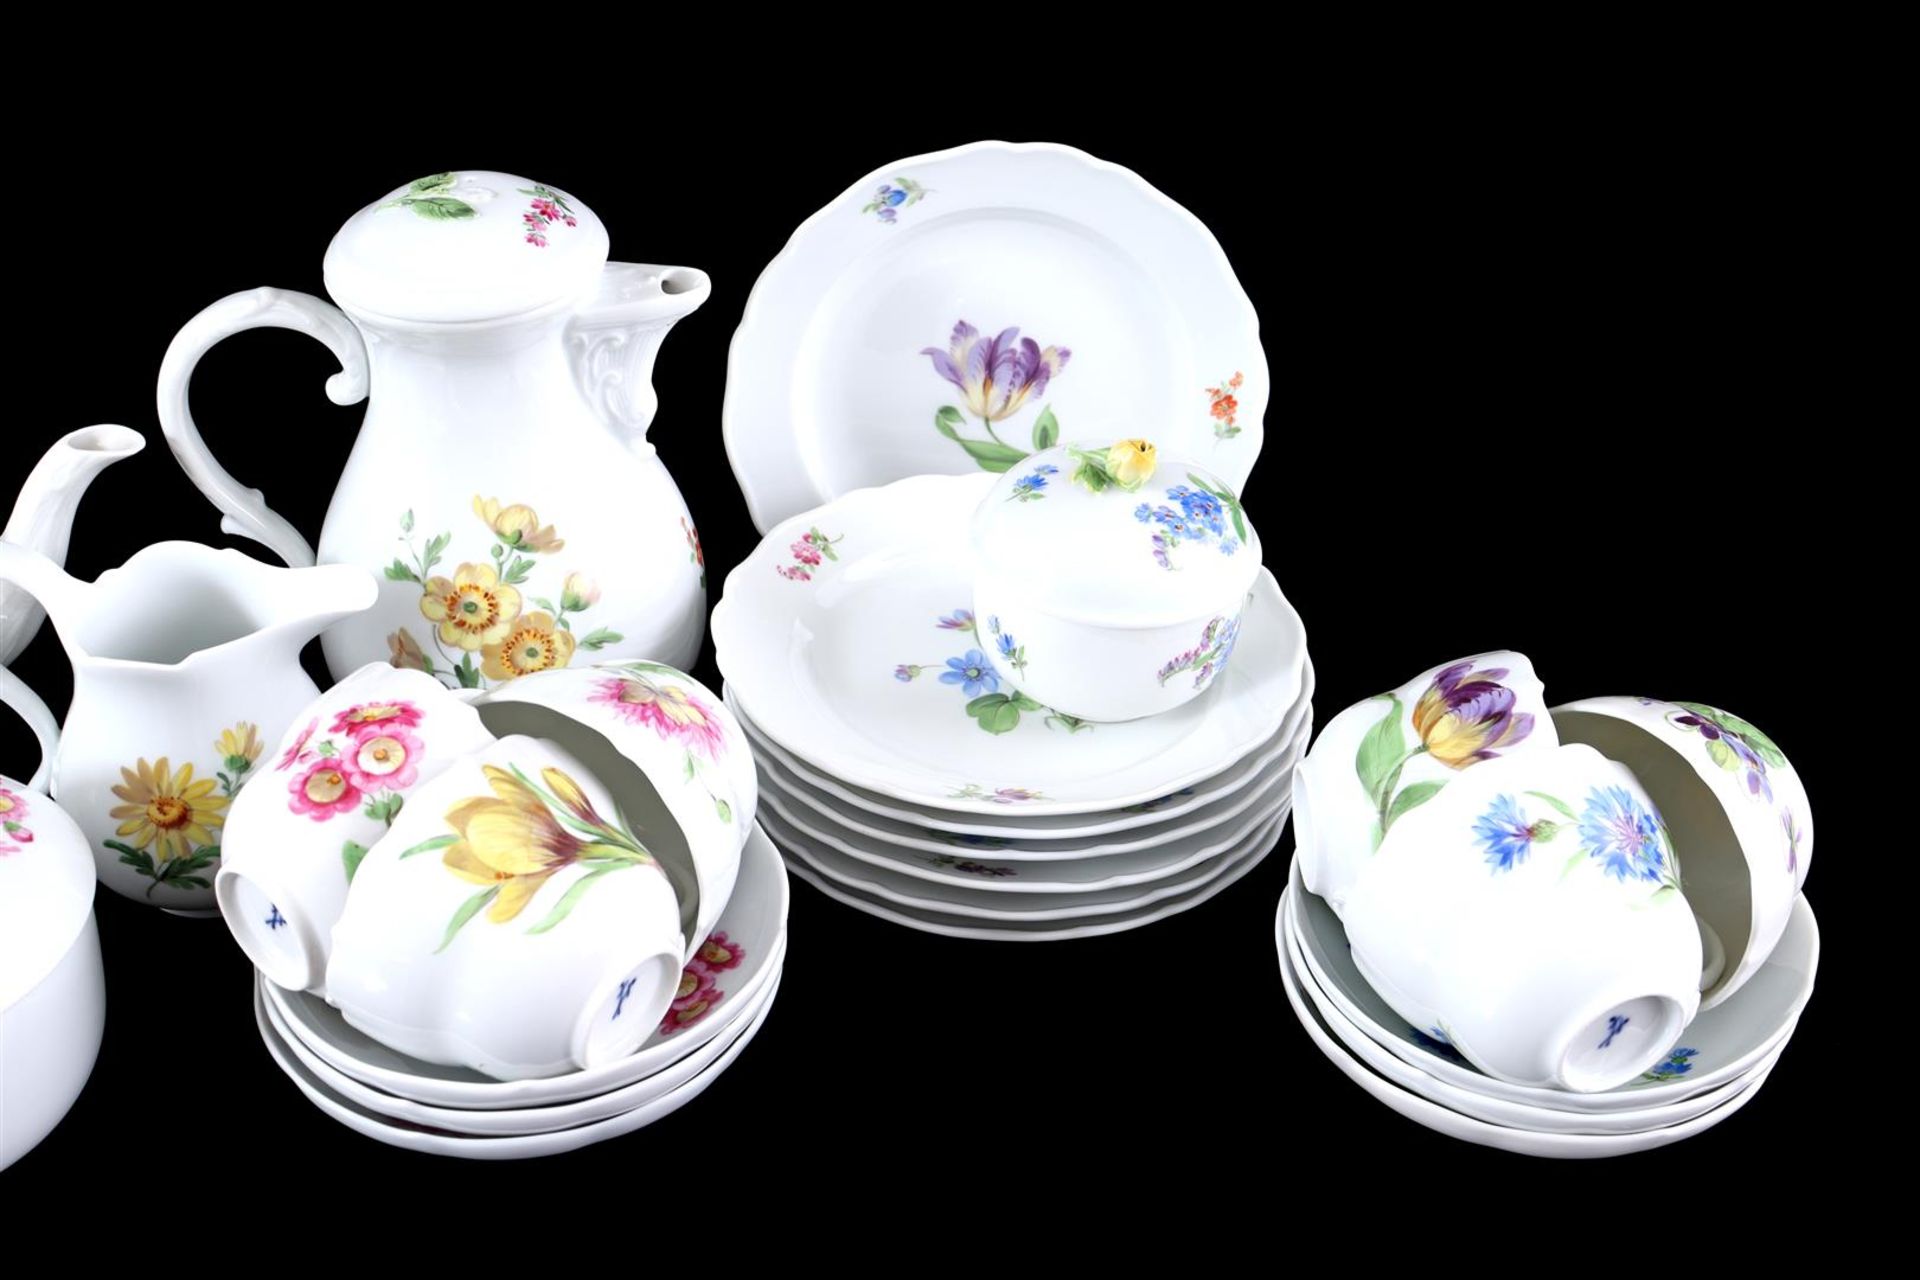 Meissen porcelain crockery - Image 3 of 6